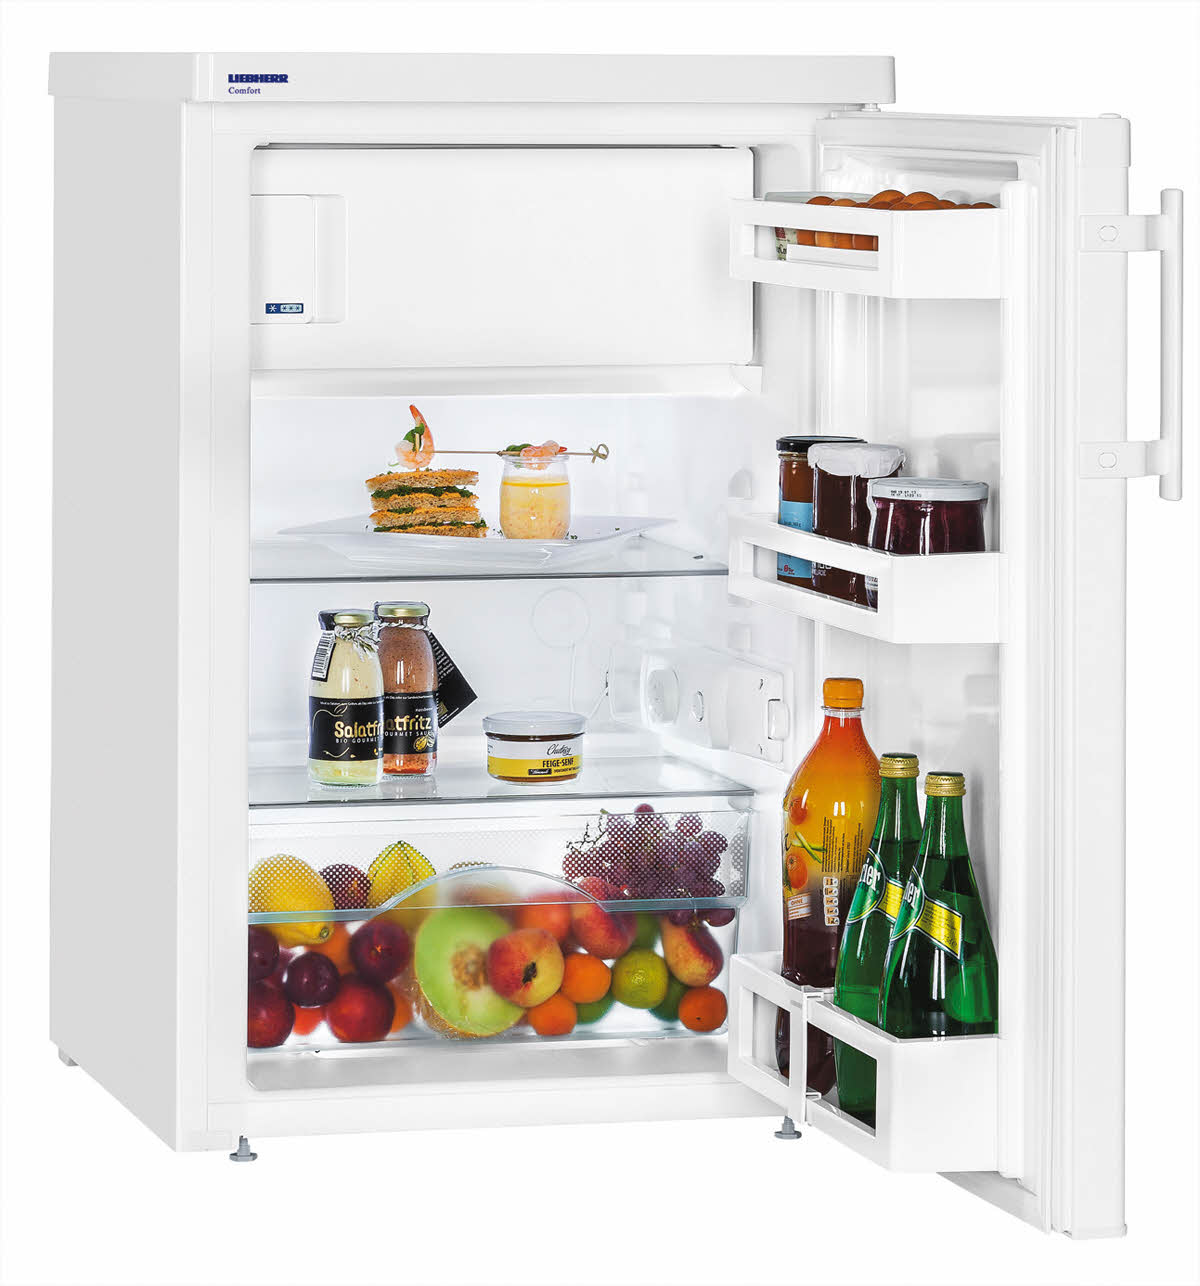 TP 1434 comfort_энергосберегающий-холодильник